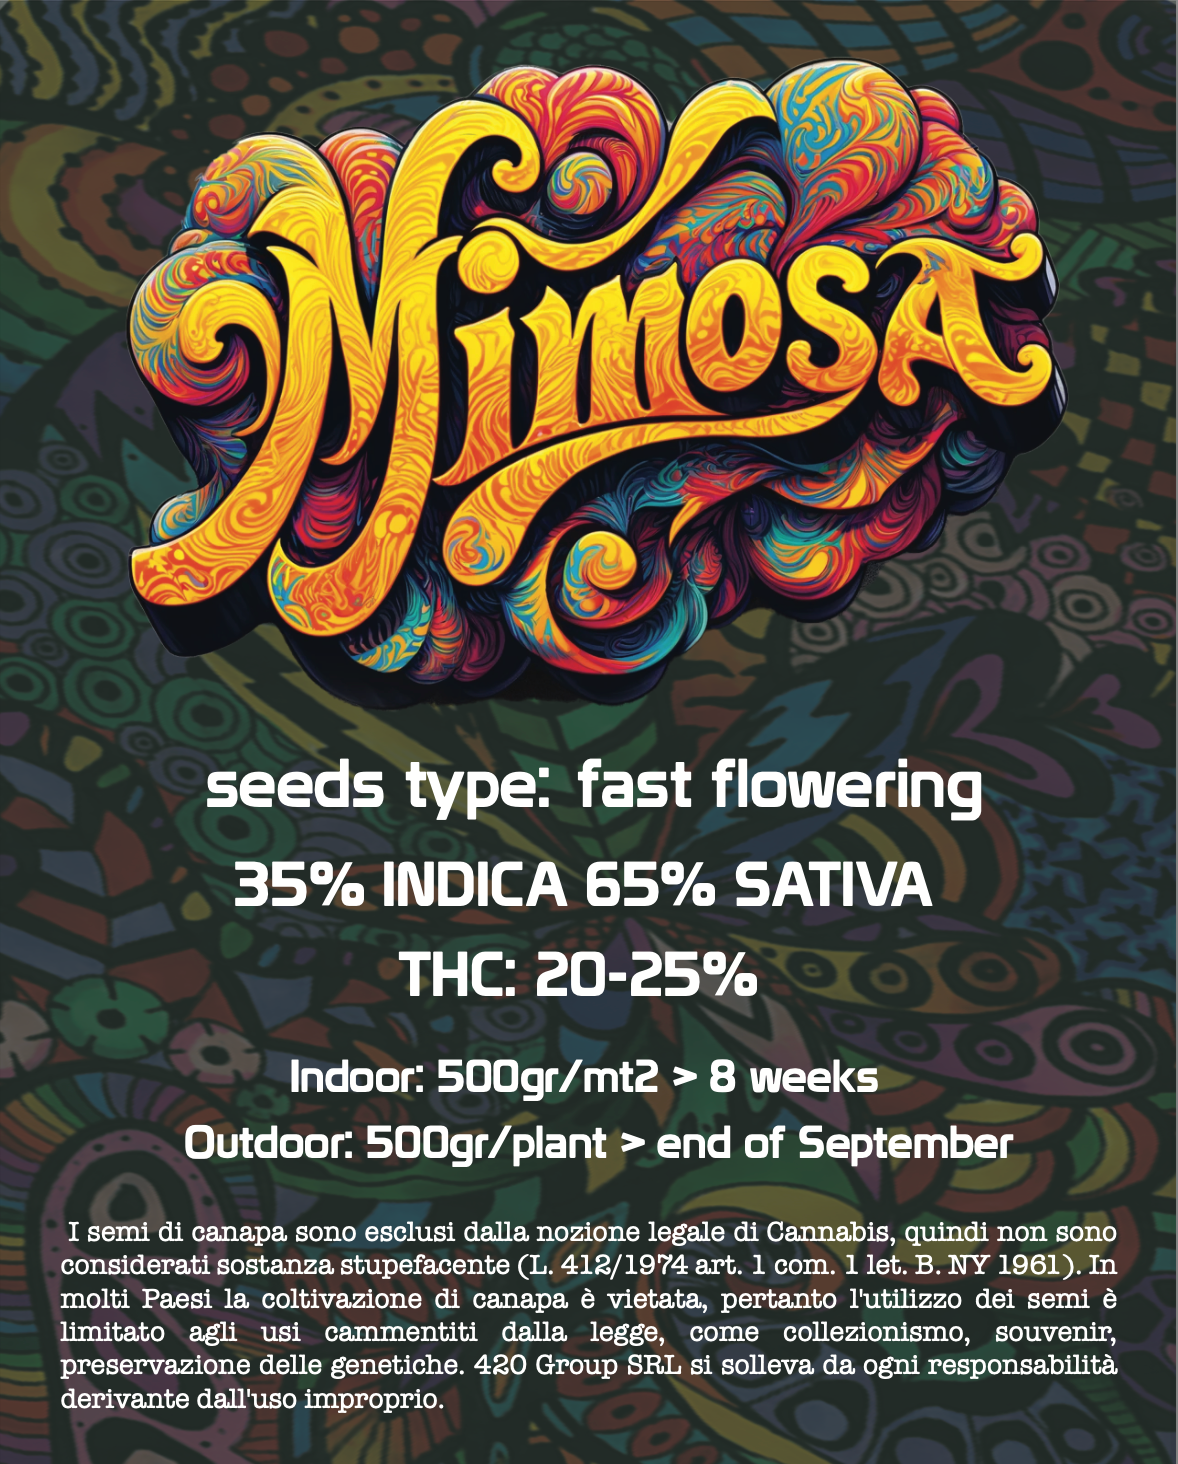 Mimosa EVO Semi di Cannabis Femminizzati THC Fast Seeds | THC 20-25% Semi Cannabis Femminizzati Ready to Grow - MamaMary